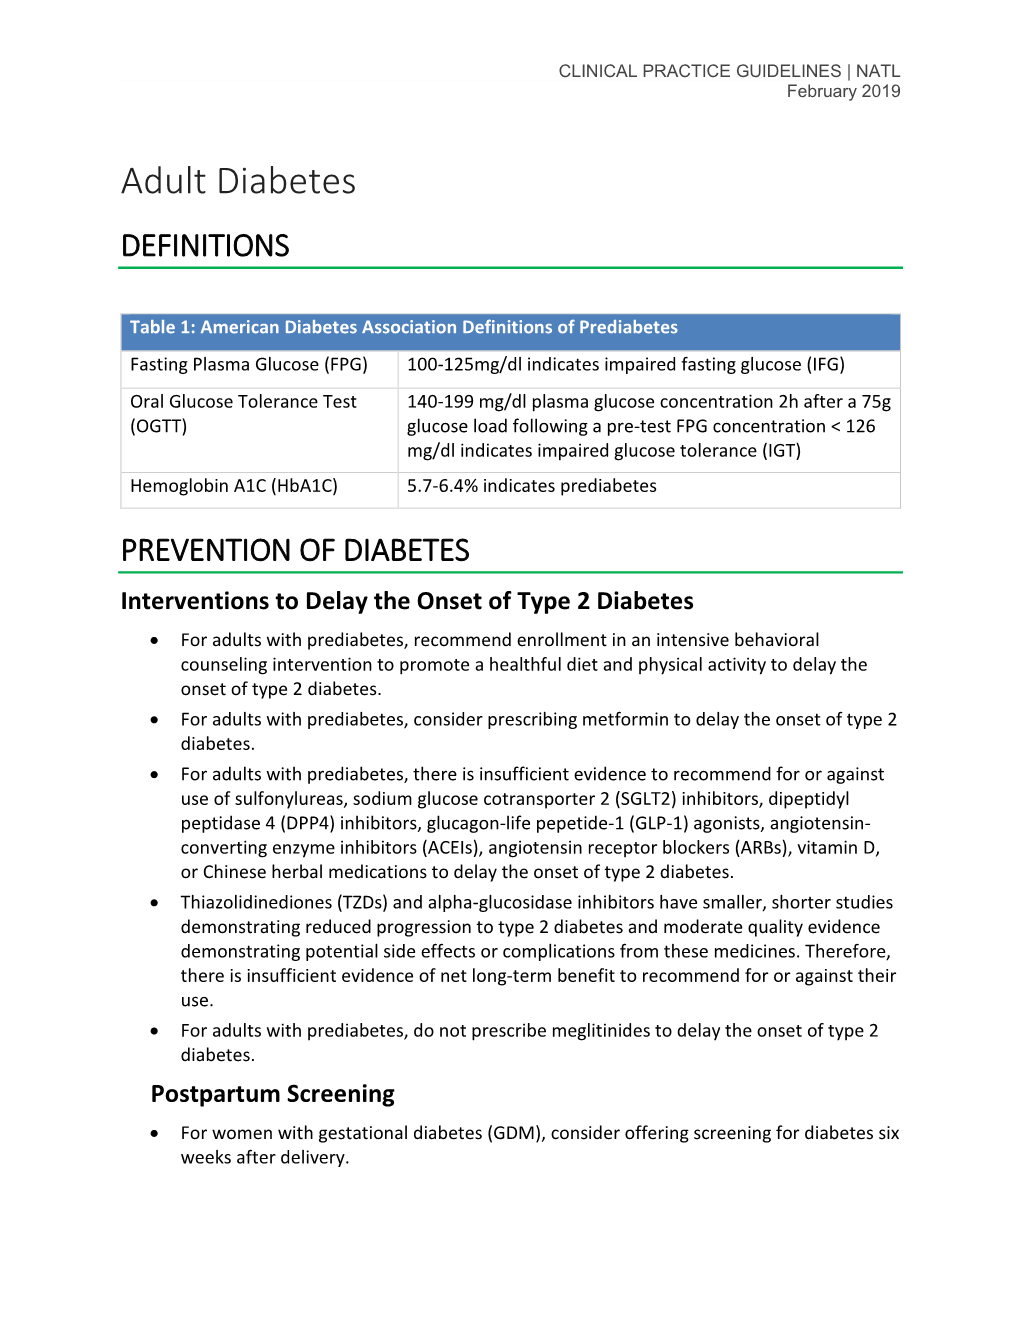 Adult Diabetes Clinician Guide